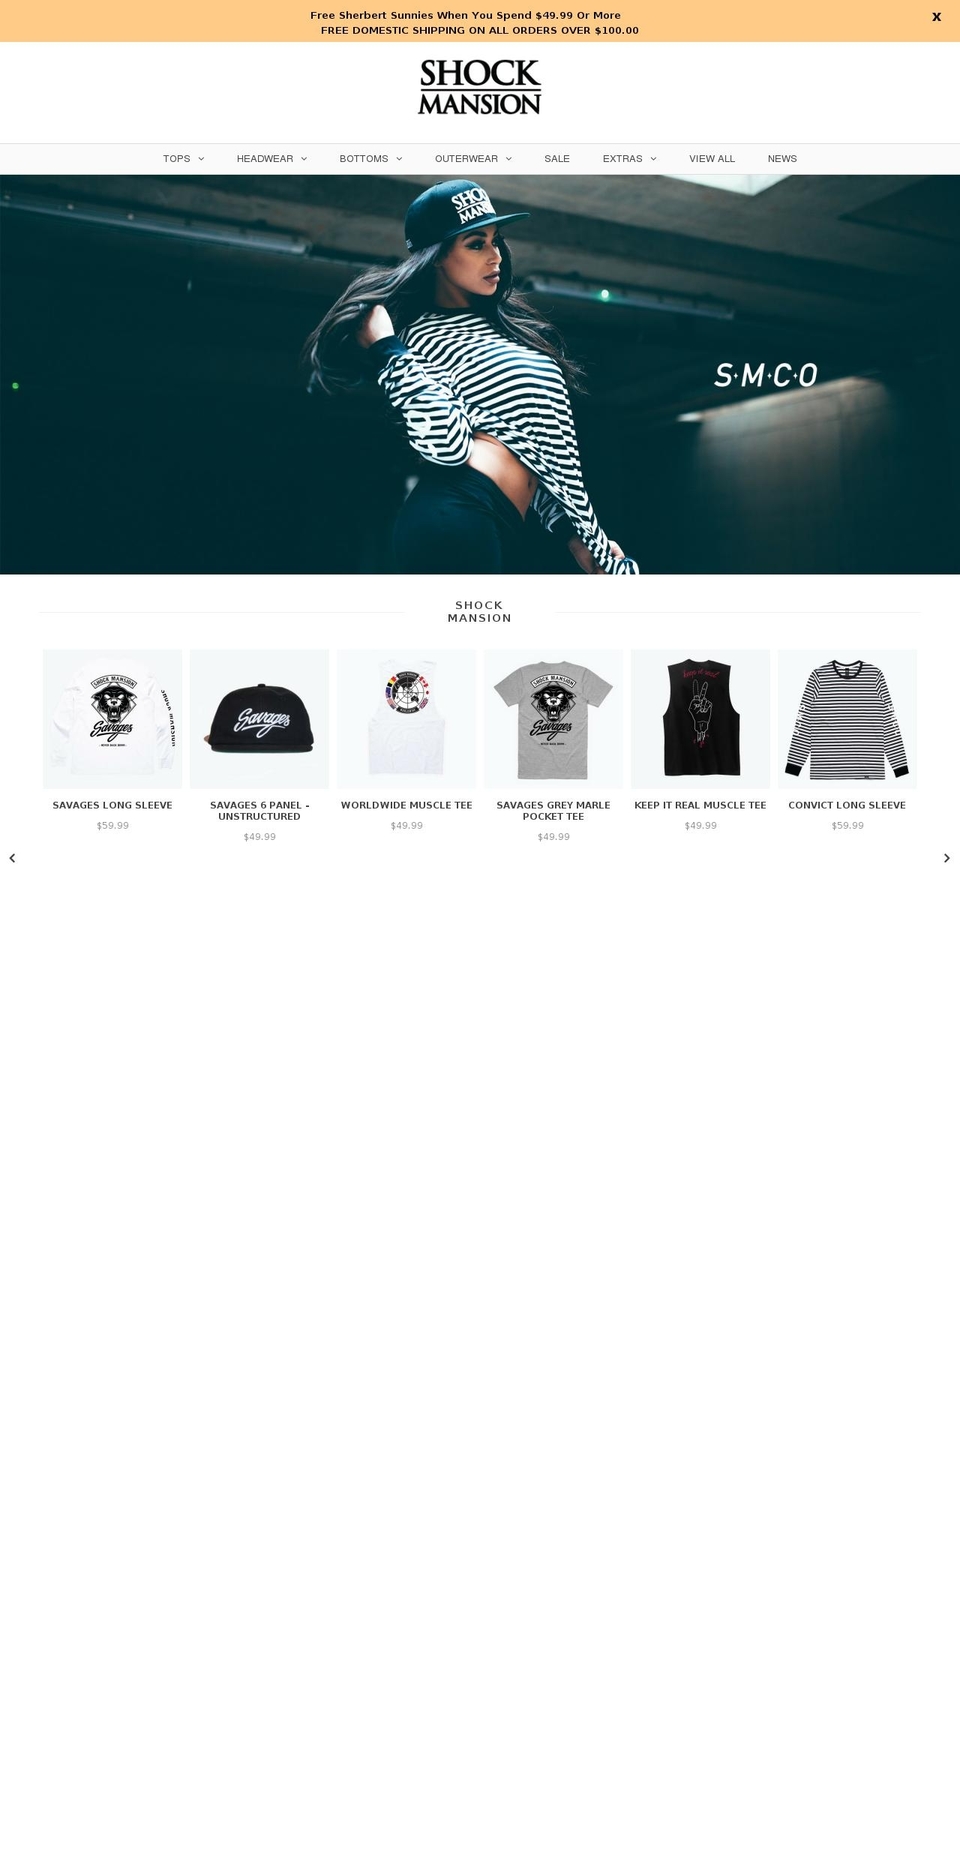 shockmansionstore.com shopify website screenshot